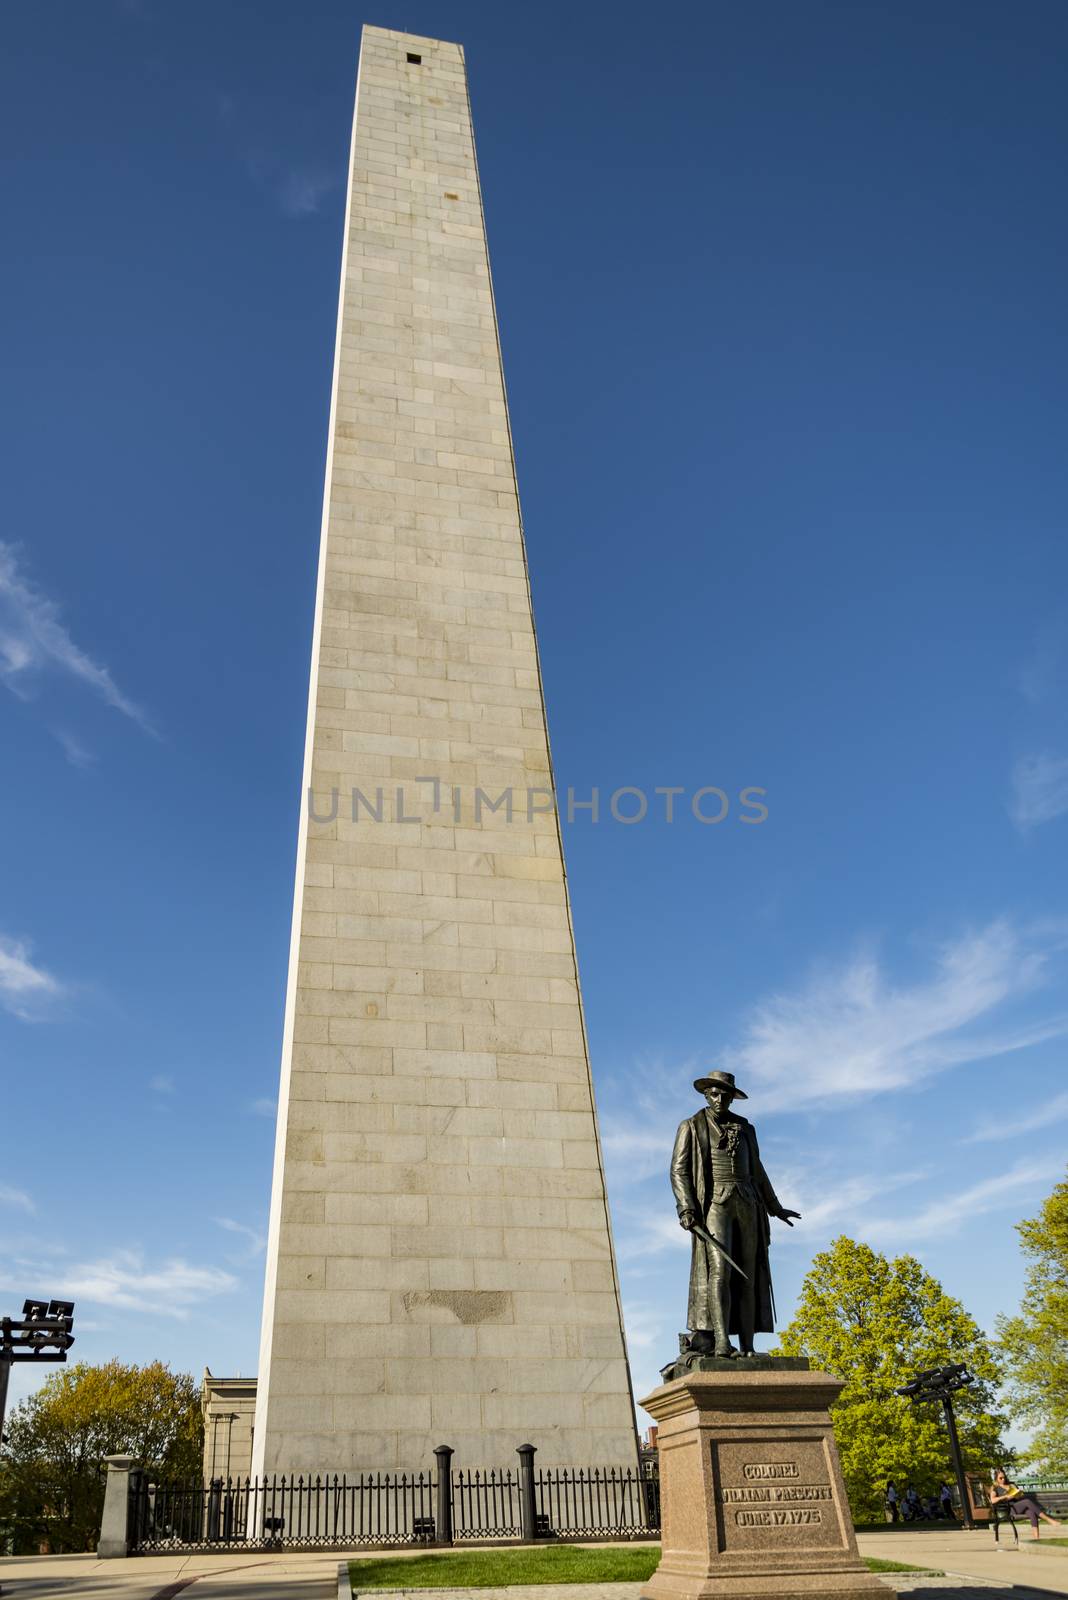 The Bunker Hill Monument in Boston, Massachusetts. by edella